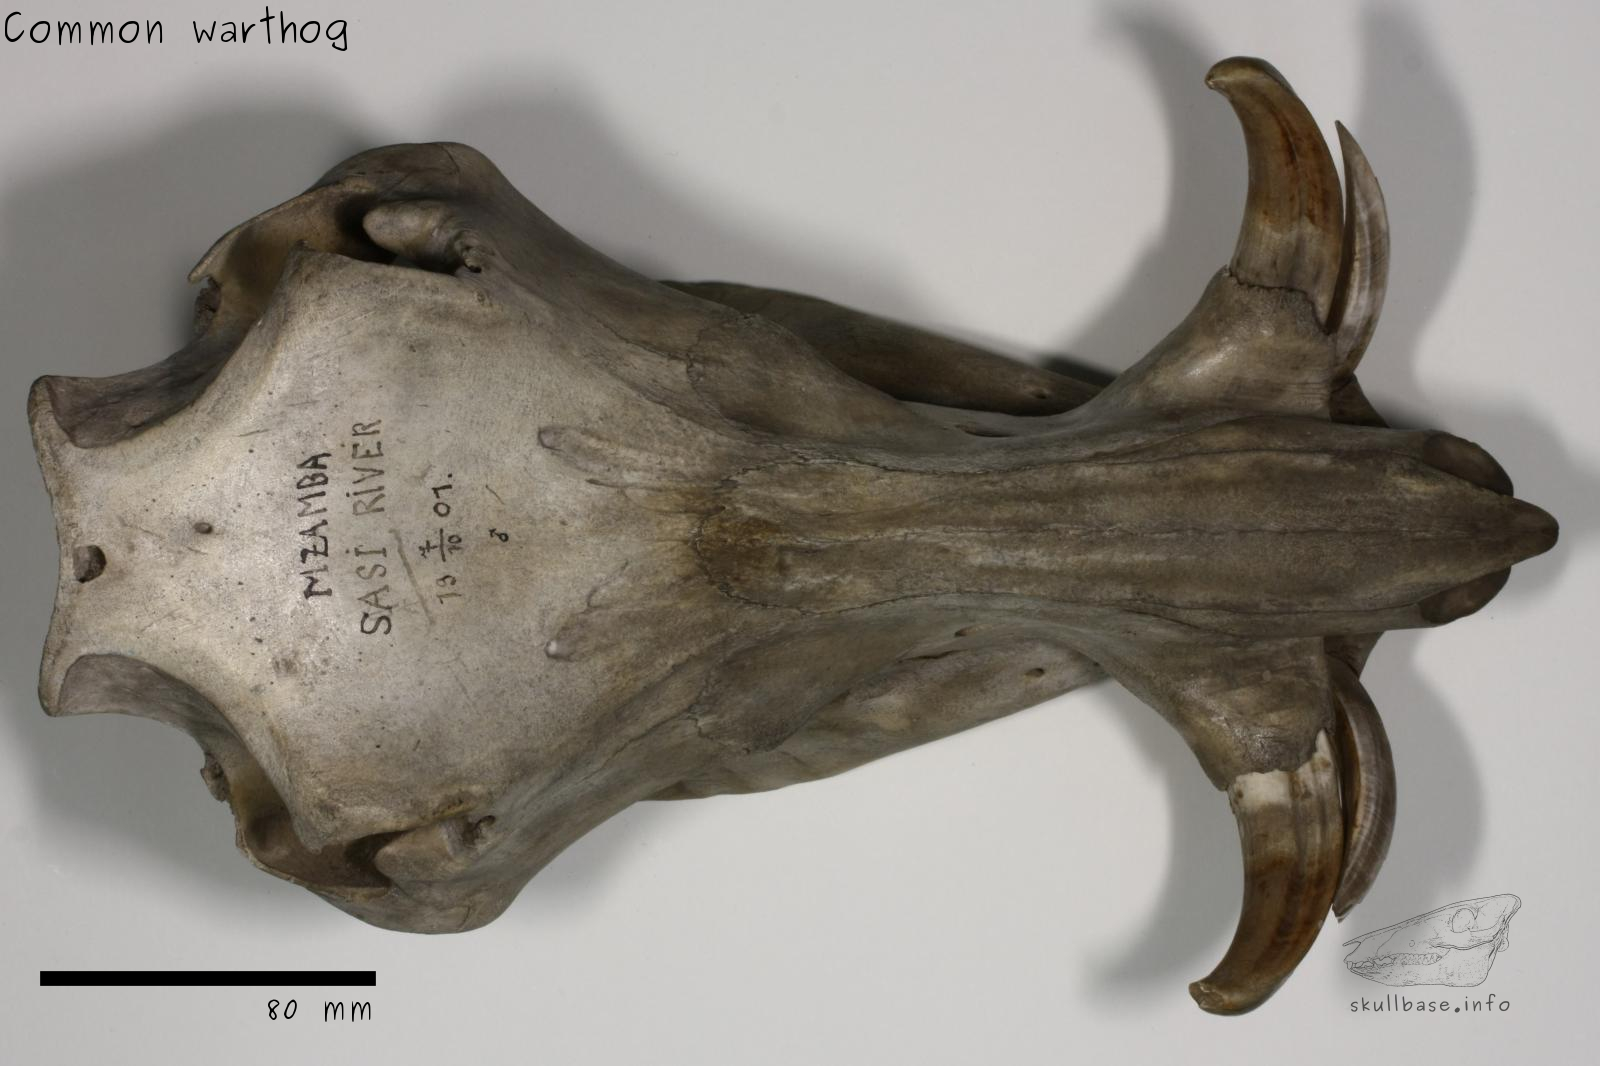 Common warthog (Phacochoerus africanus) skull dorsal view